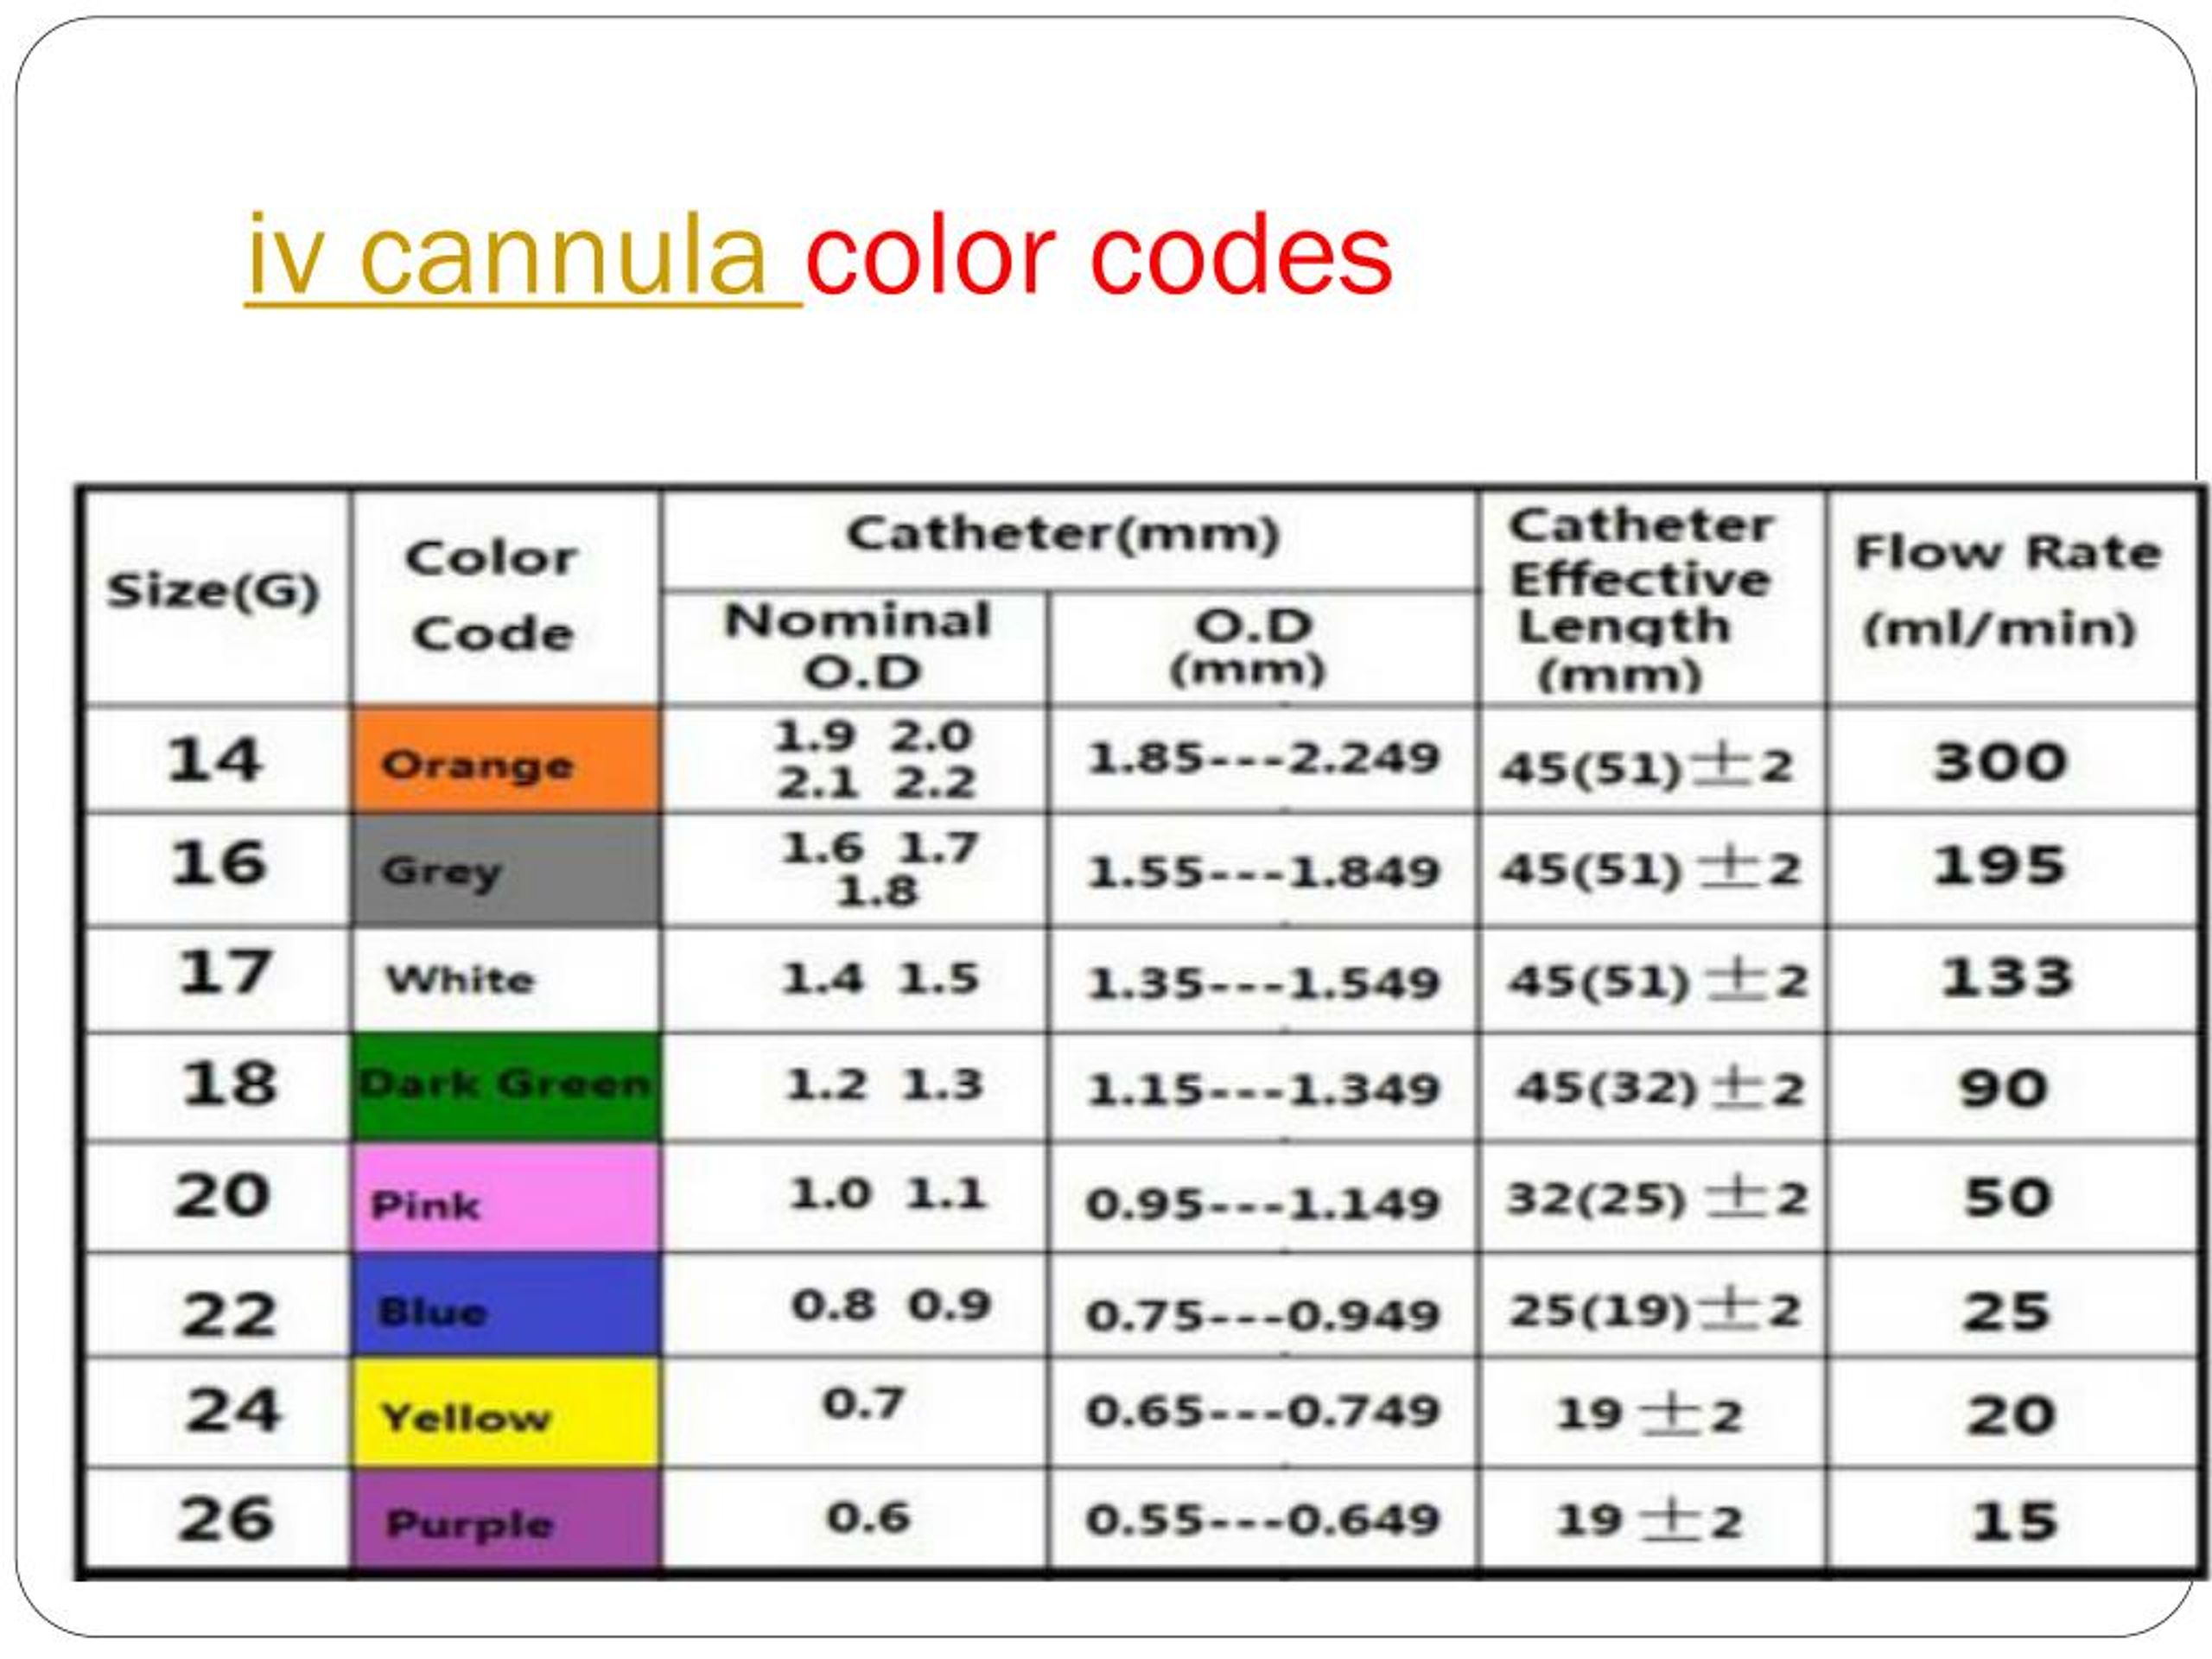 iv cannula color codes.